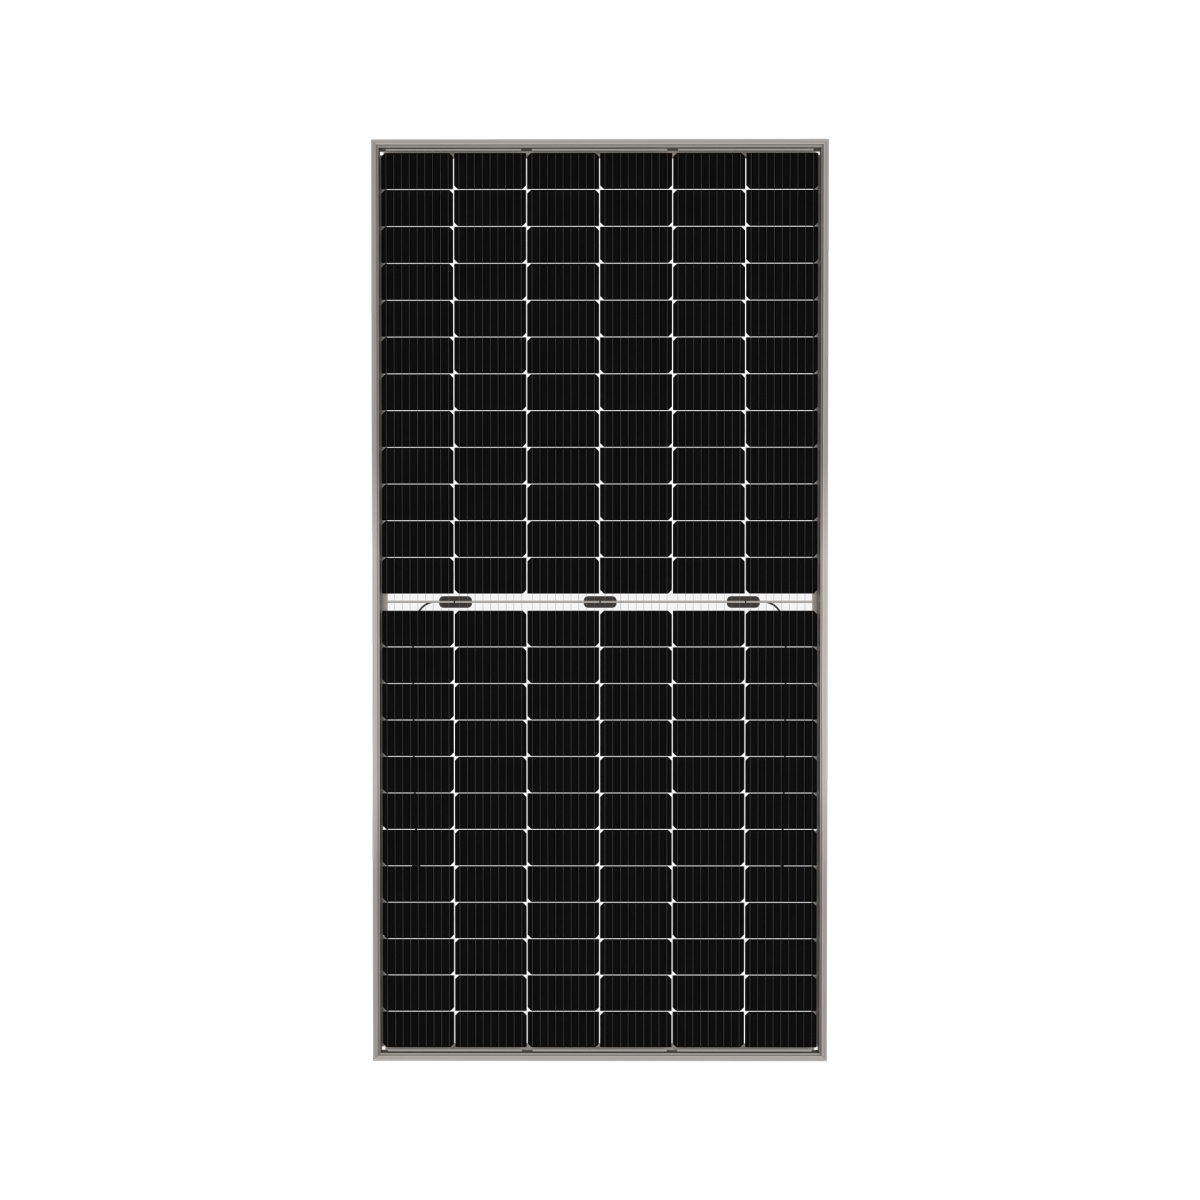 TommaTech 435 Watt 144 Percmono Bifazial Half-Cut Multi Busbar Solarpanel